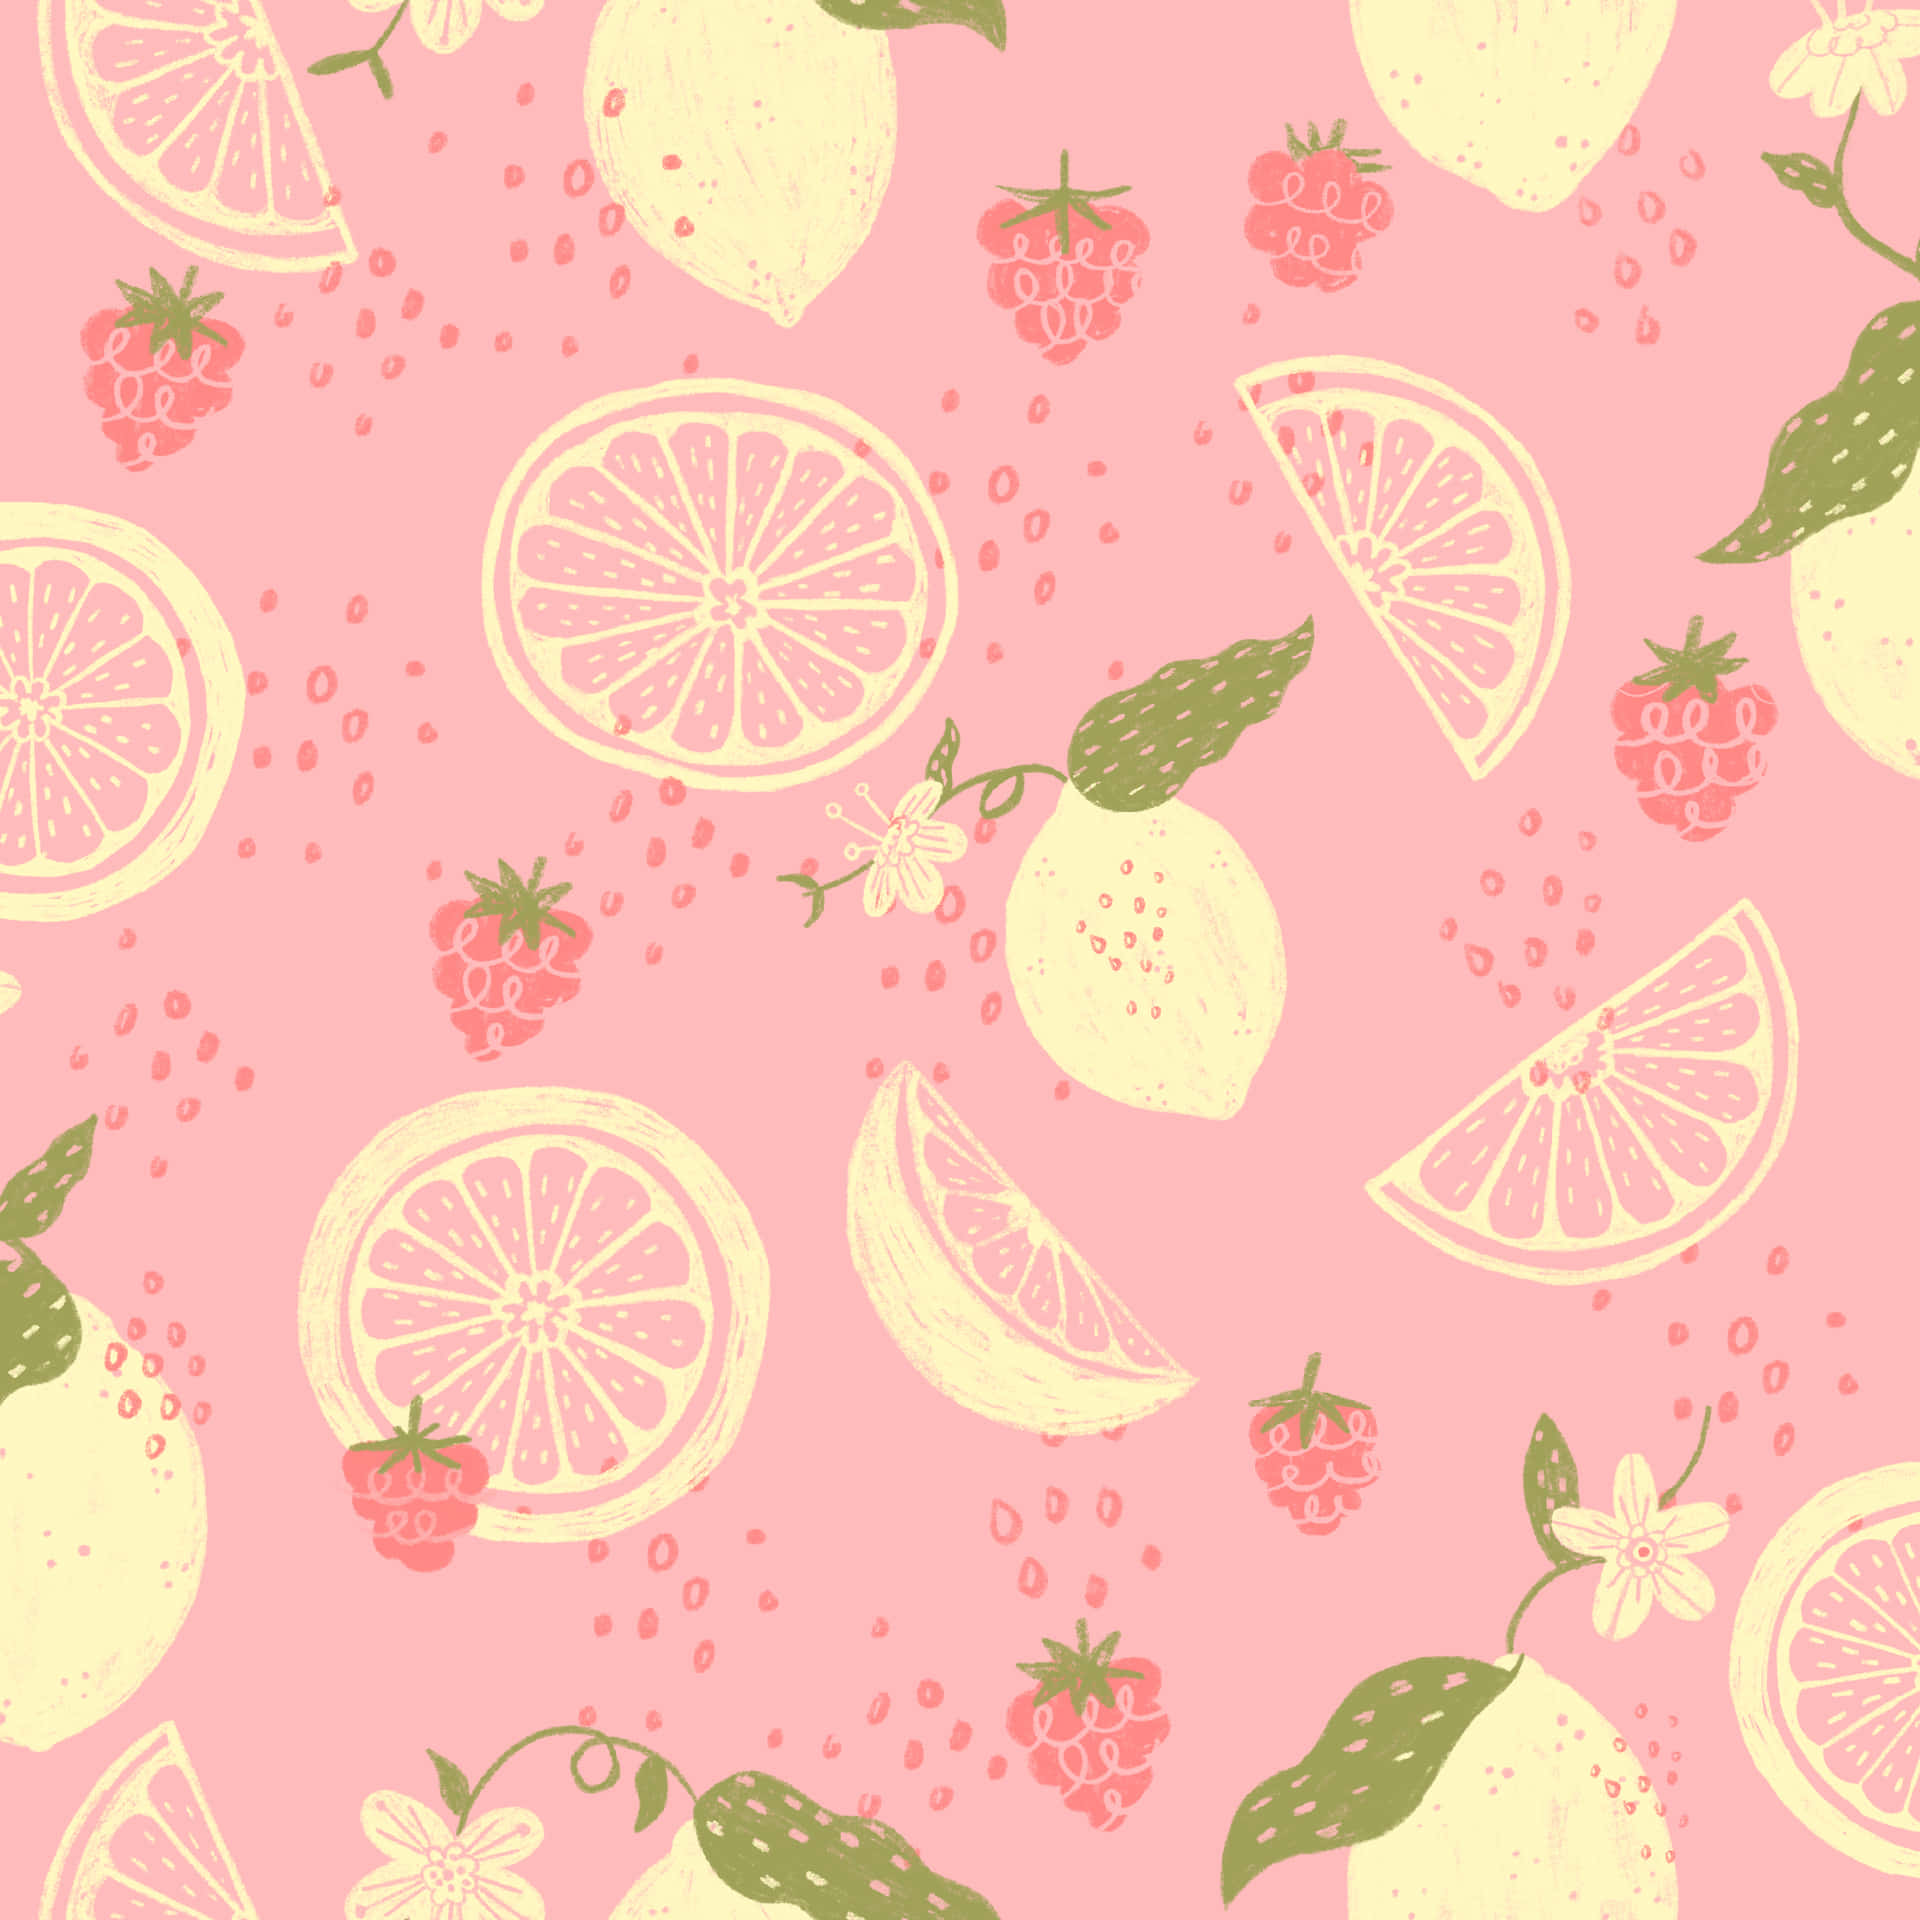 Refreshing Pink Lemonade Wallpaper